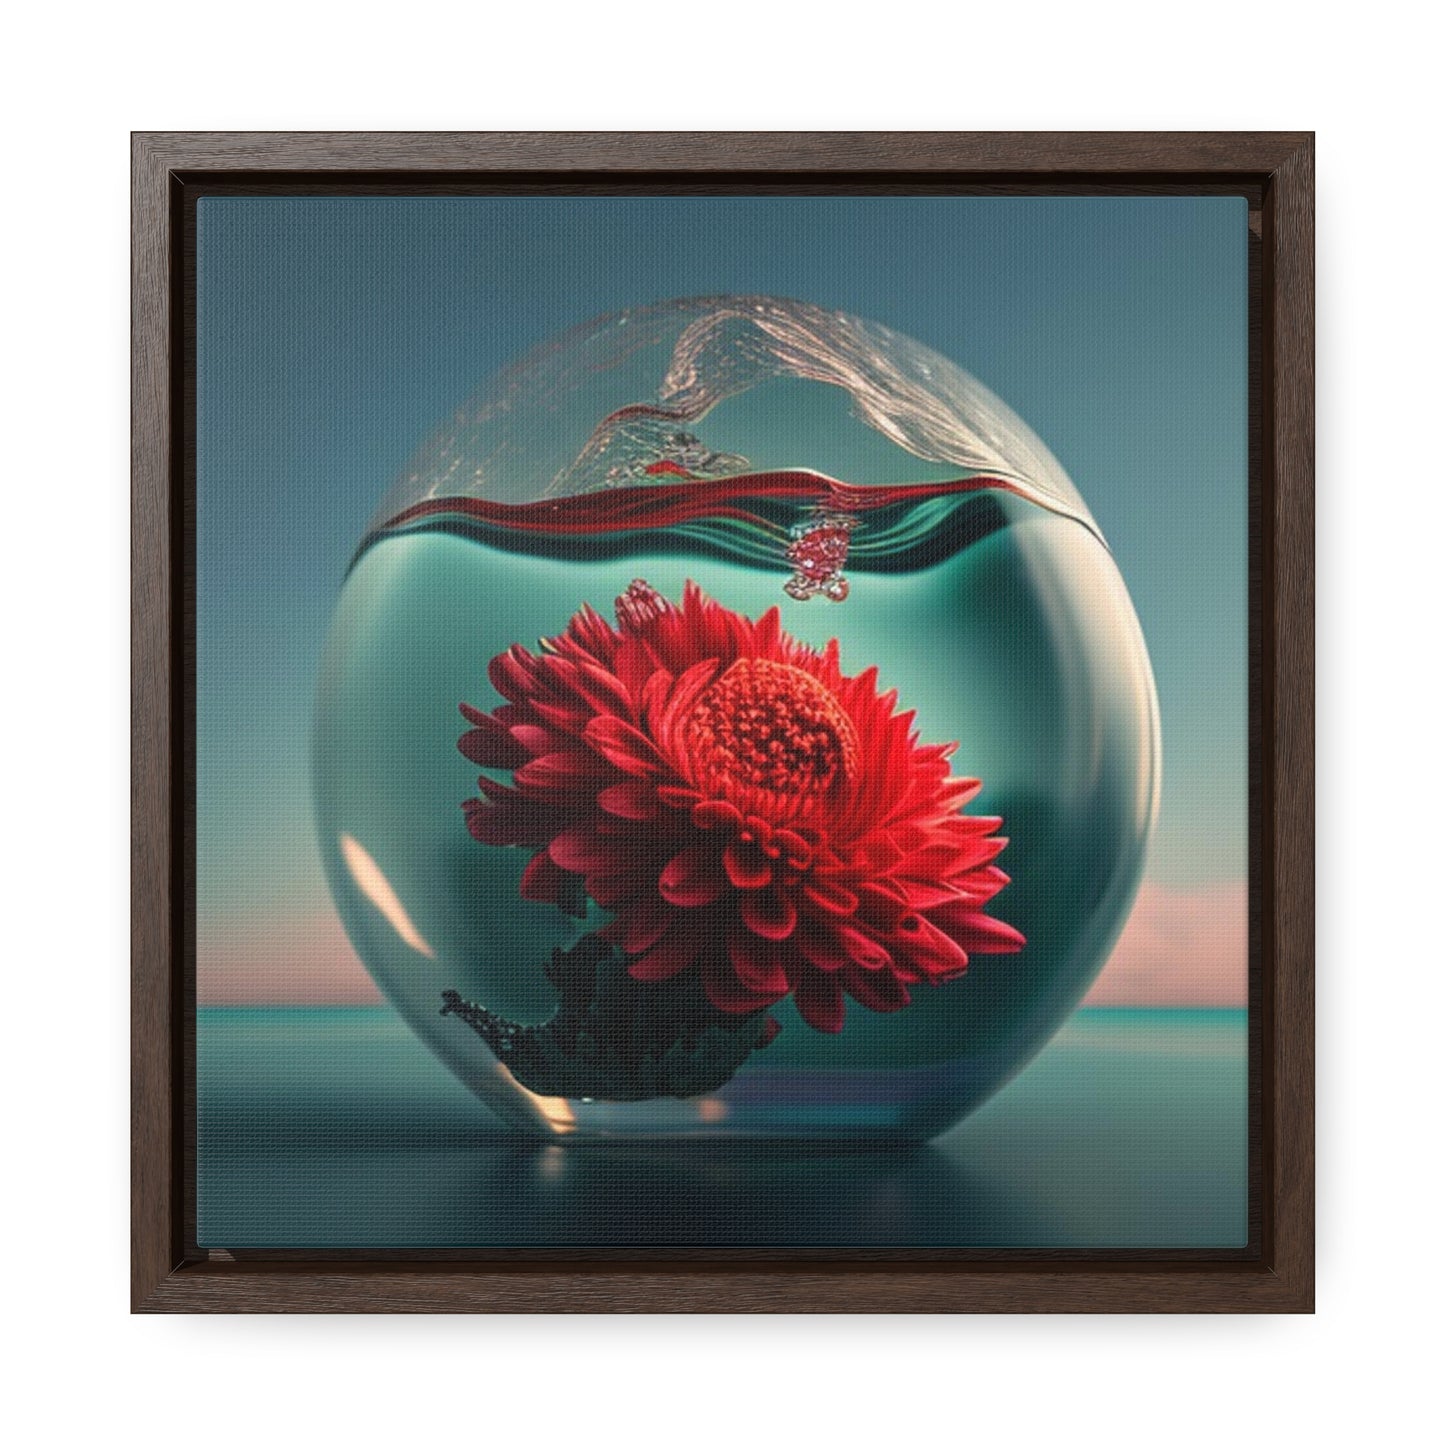 Gallery Canvas Wraps, Square Frame Chrysanthemum 4